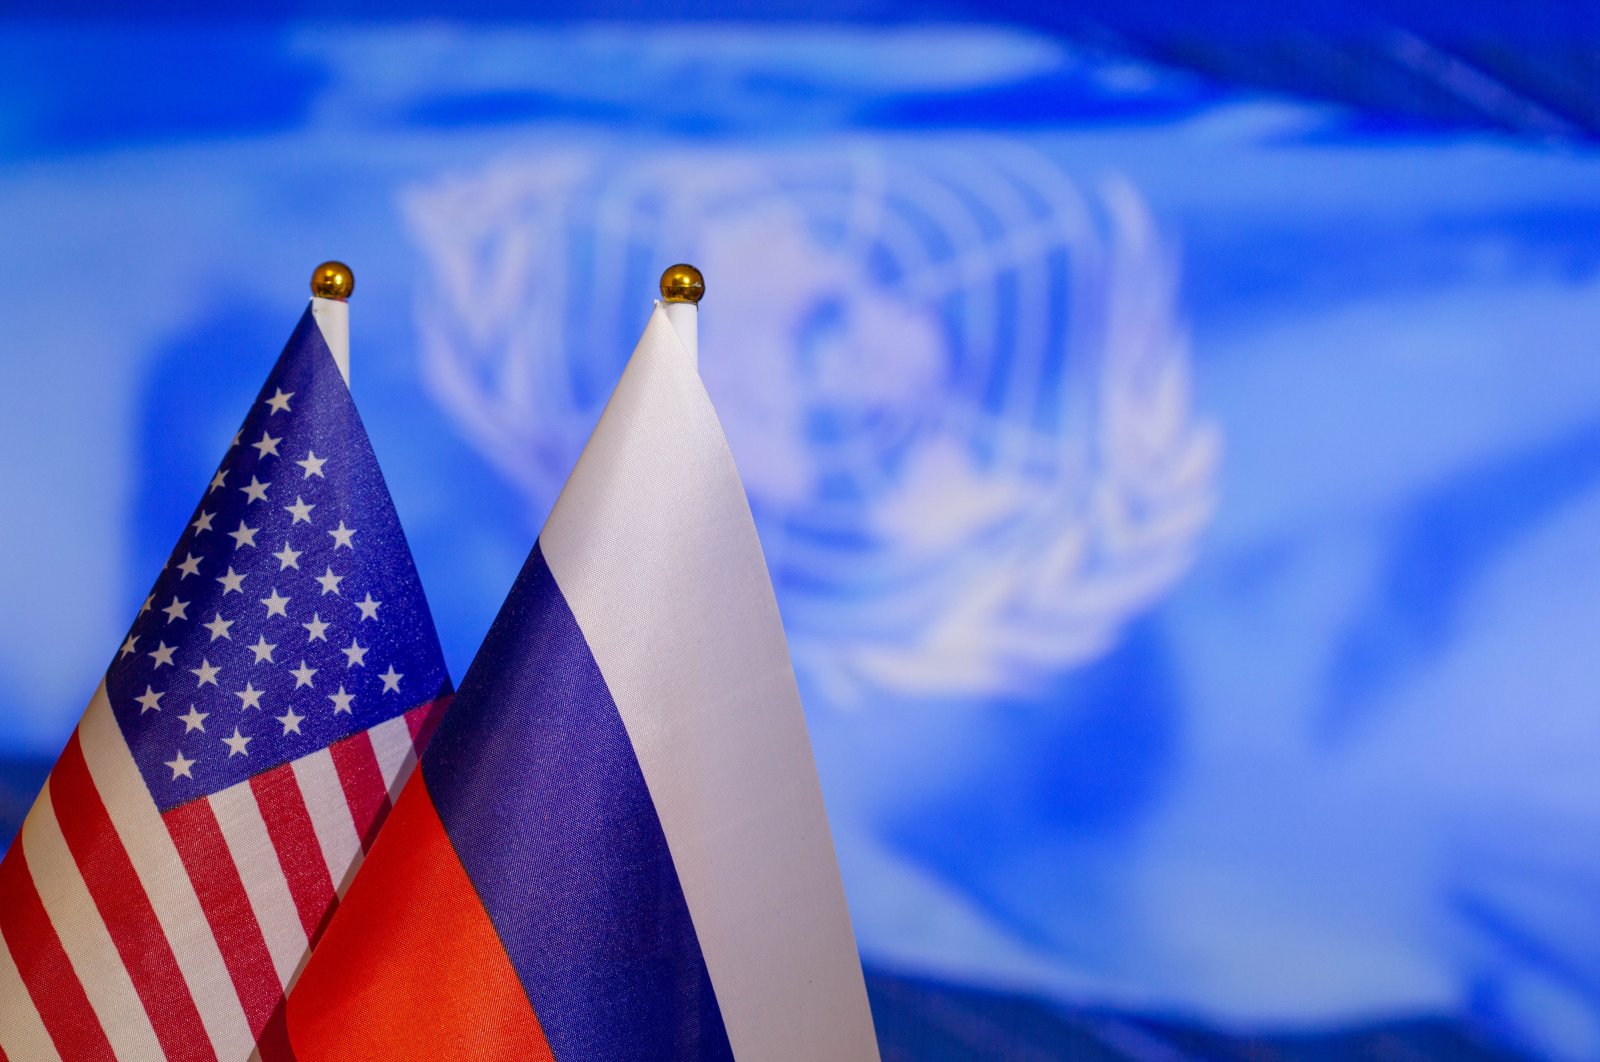 Ancaman utama di DK PBB untuk perdamaian dunia: AS, bukan Rusia